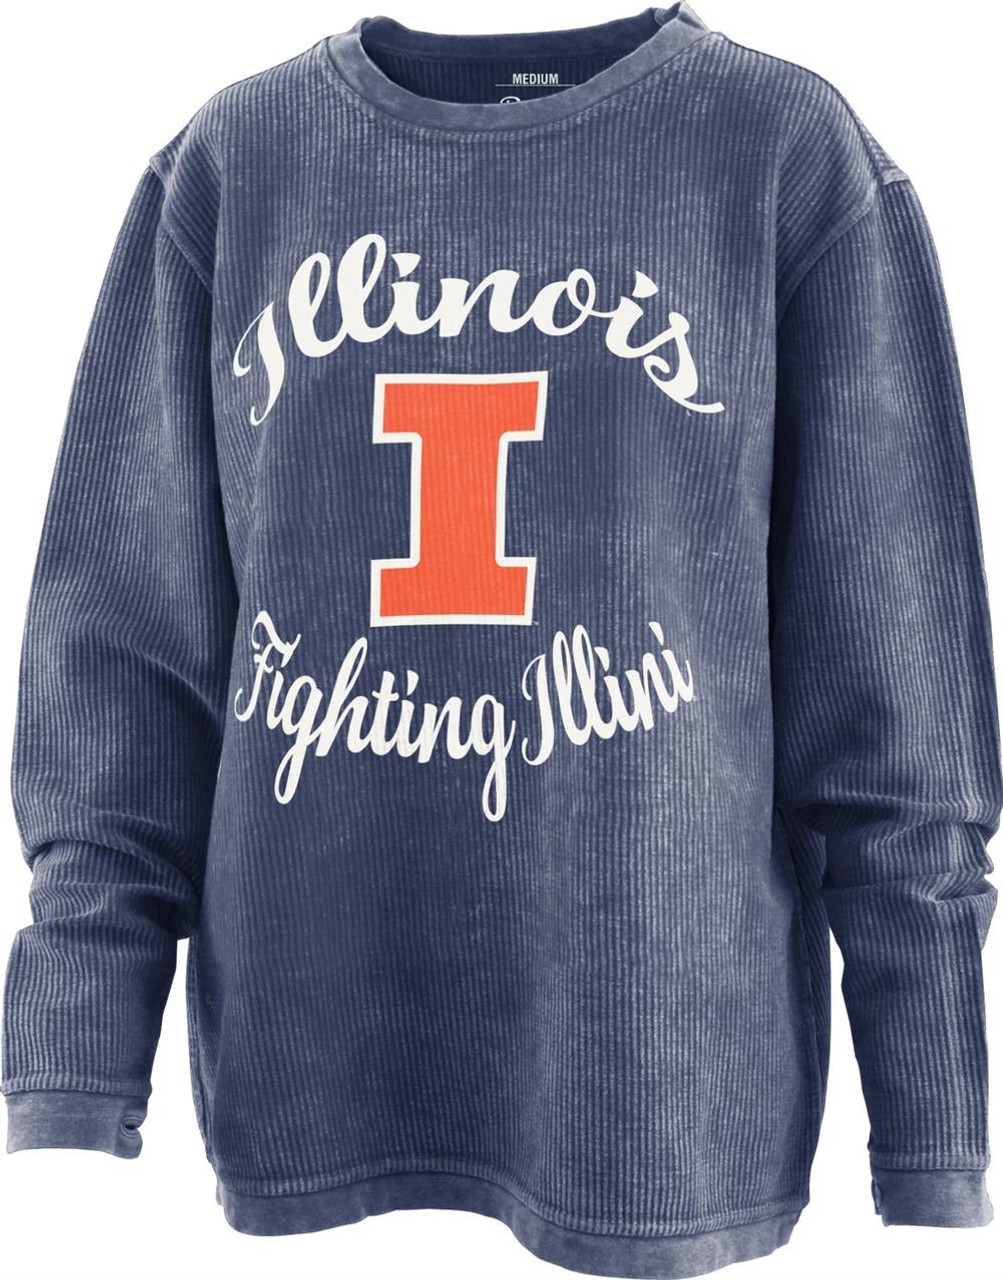  University of Illinois Cotton Fabric with New Tone ON